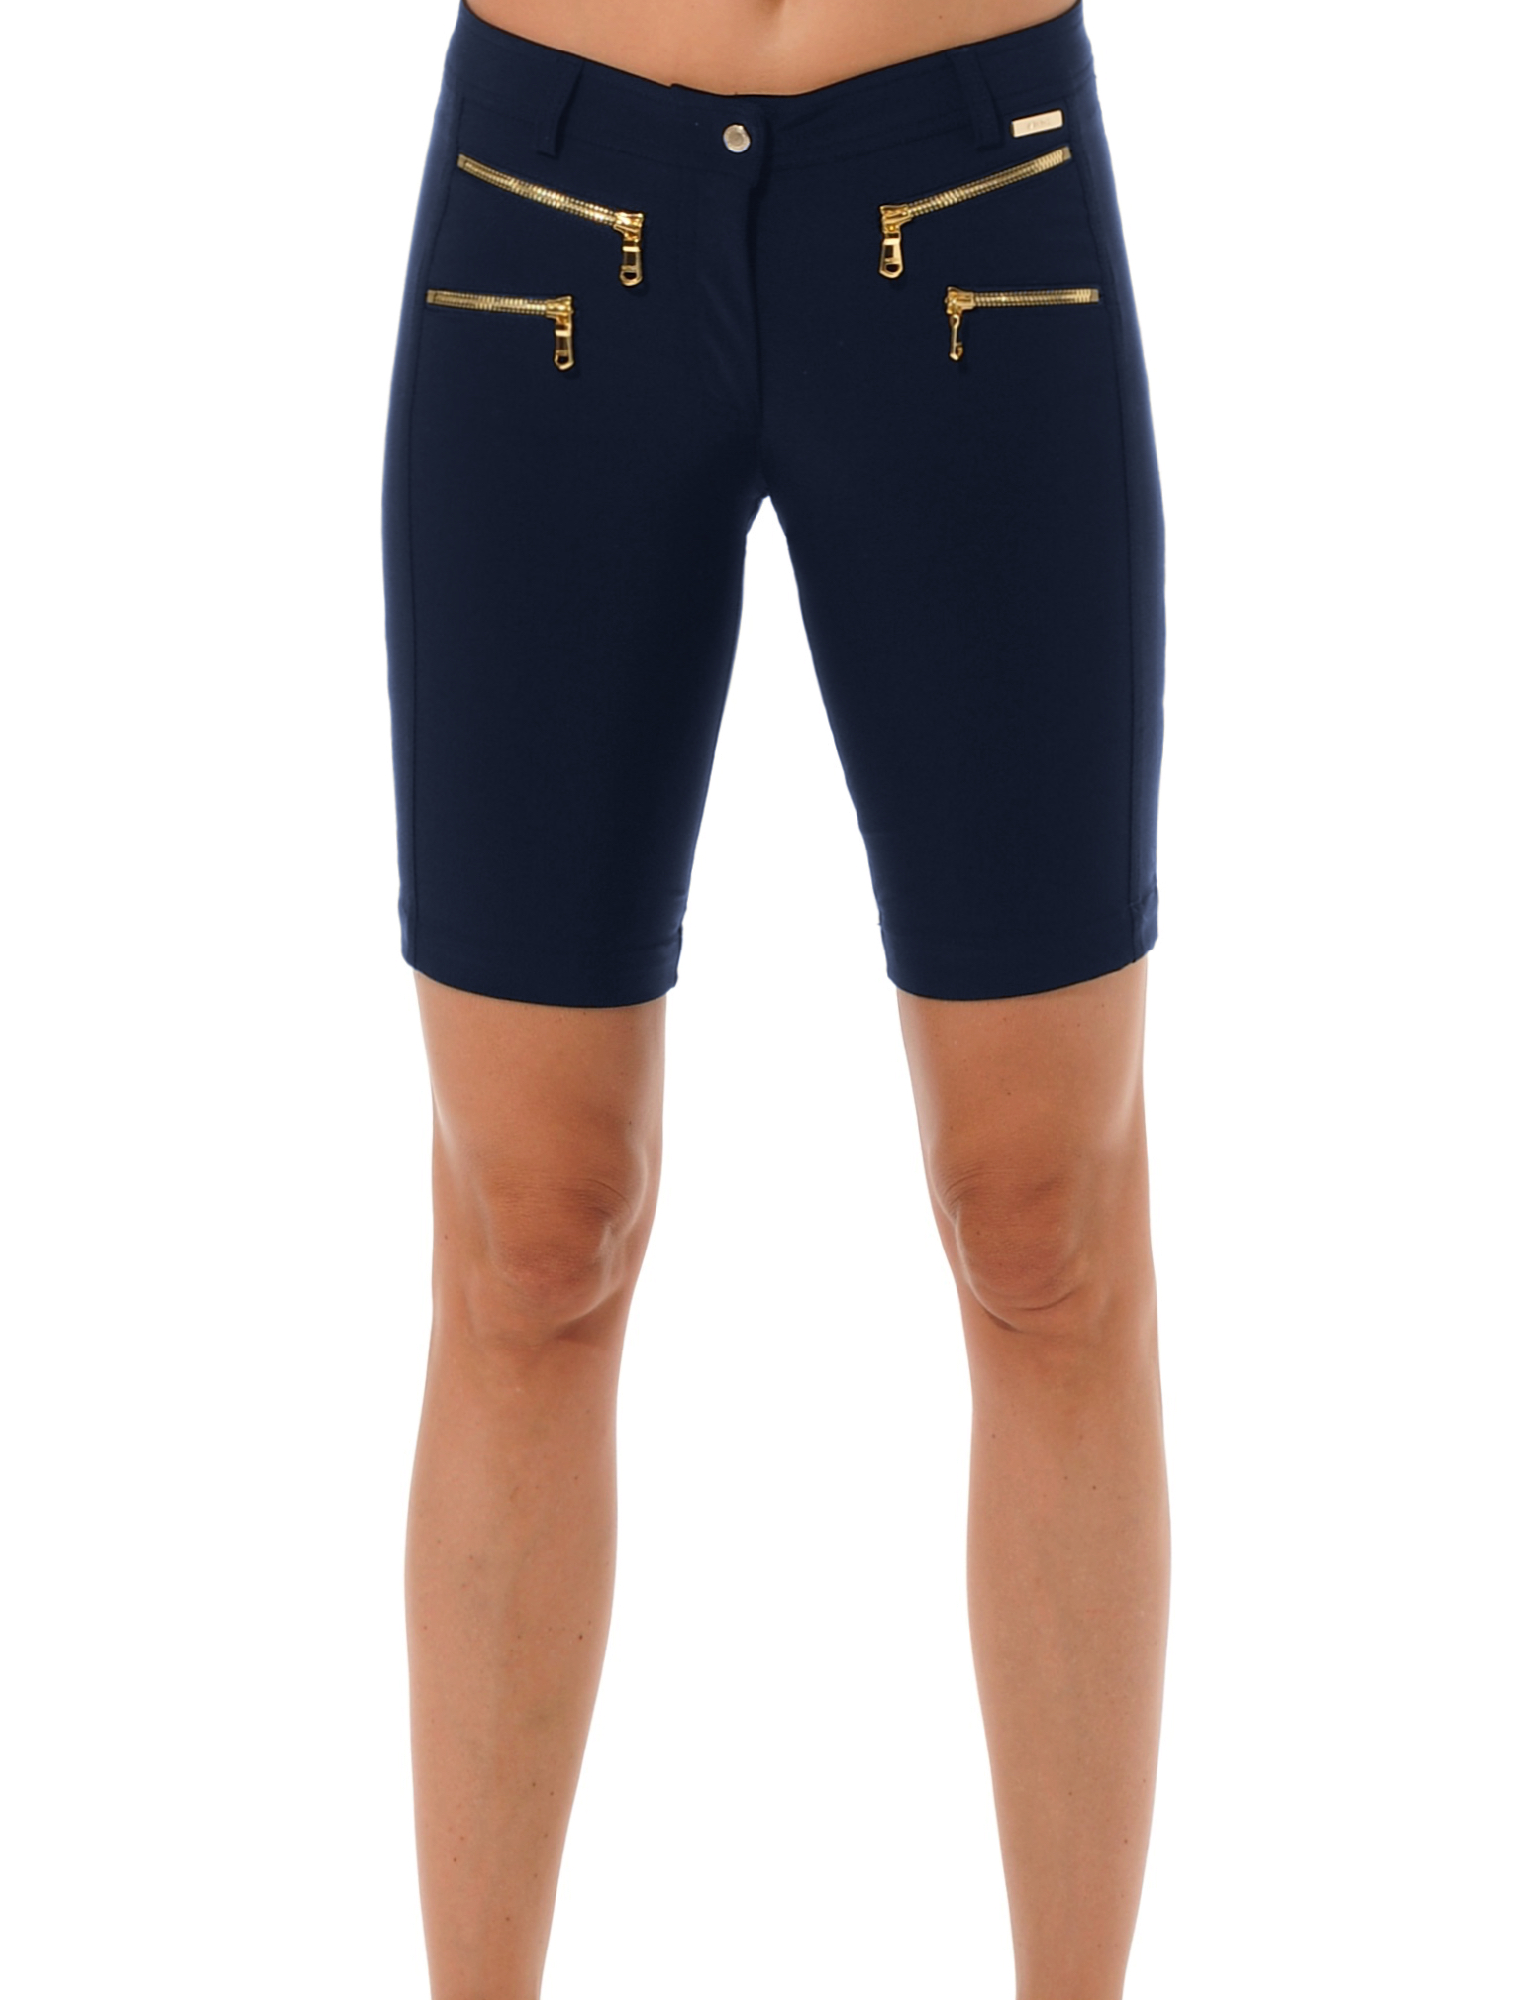 4way stretch shiny gold double zip shorts navy 